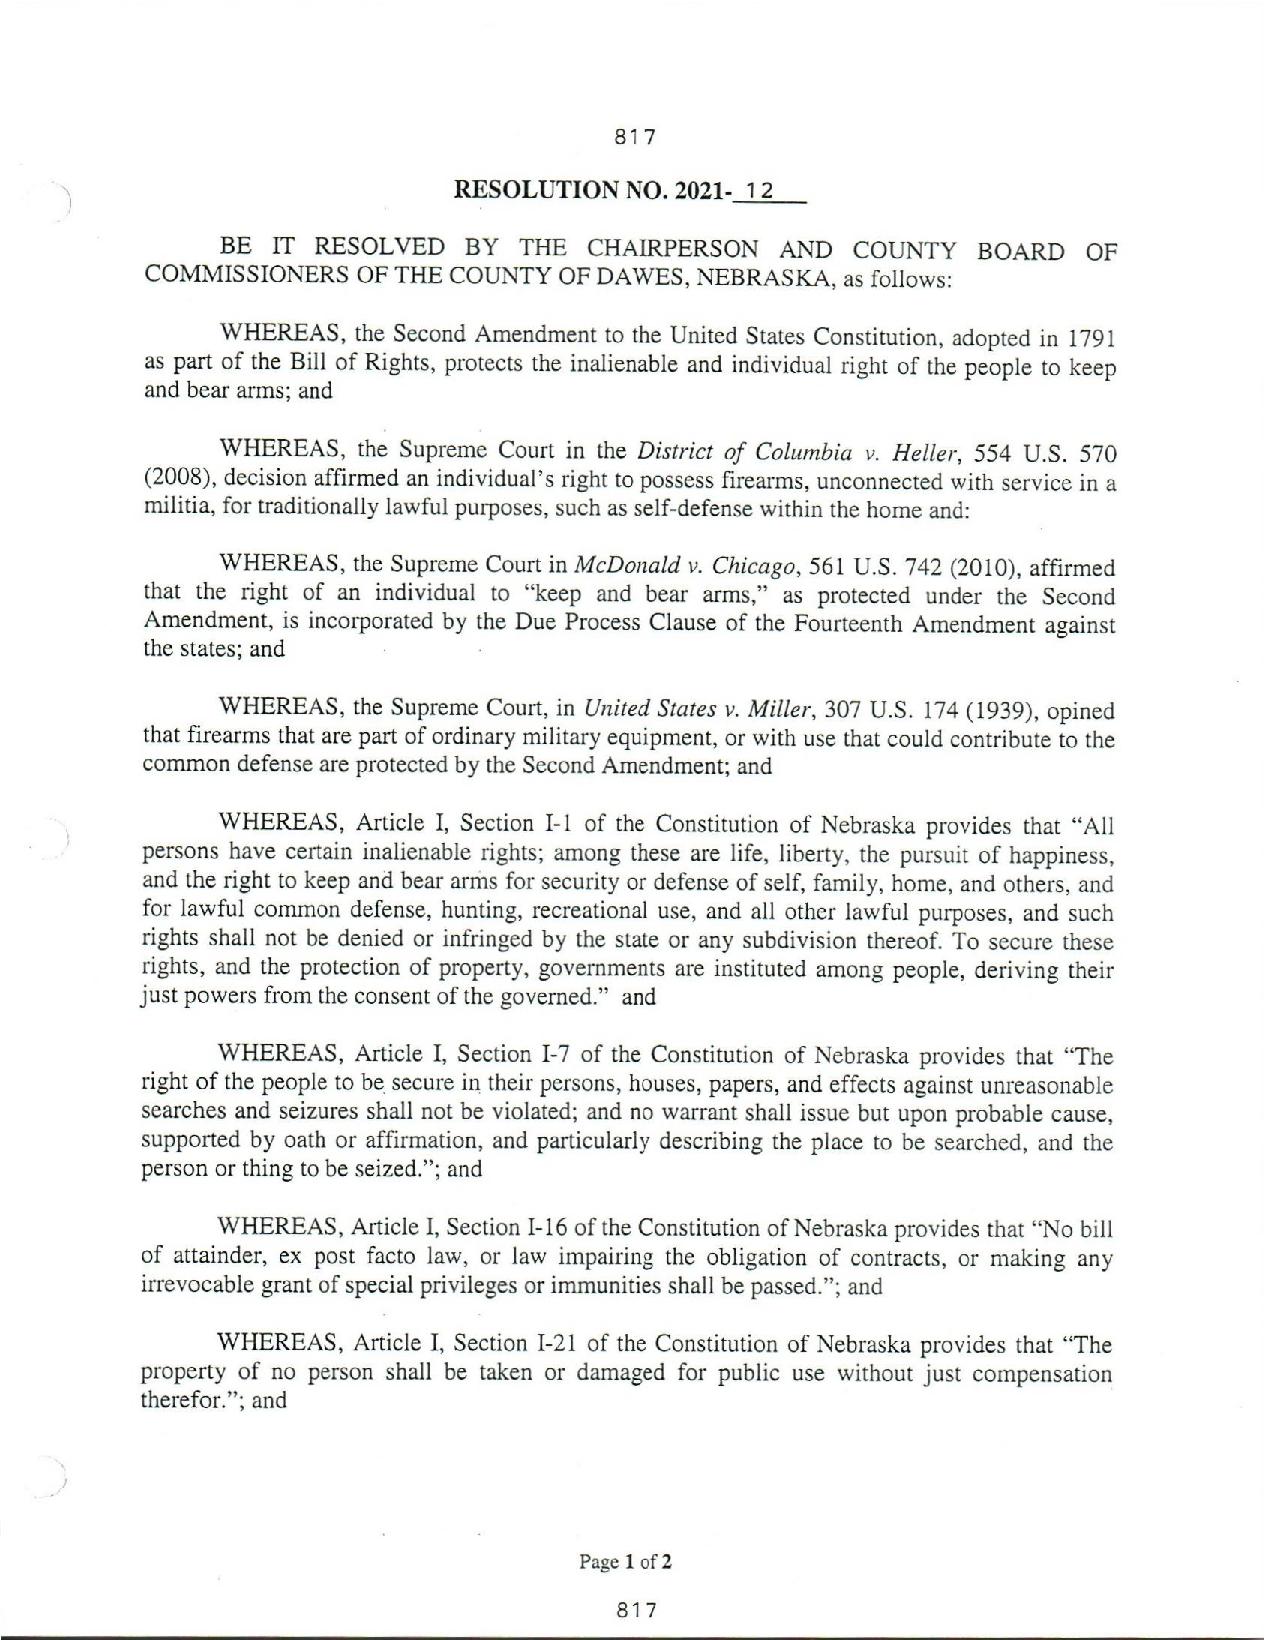 Dawes County Nebraska 2nd Amendment Page 1